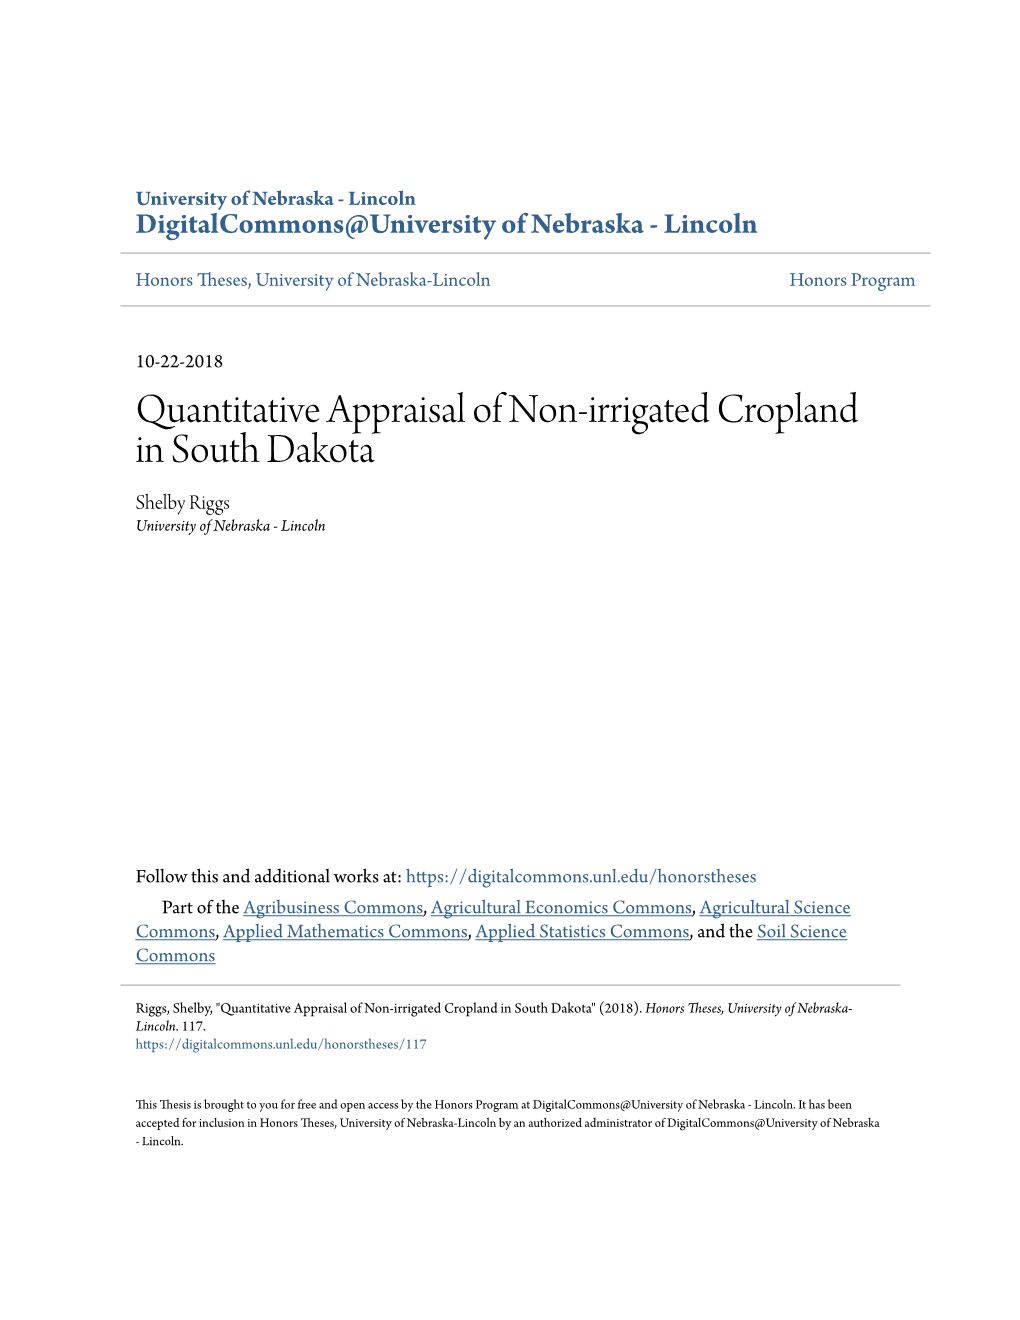 Quantitative Appraisal of Non-Irrigated Cropland in South Dakota Shelby Riggs University of Nebraska - Lincoln